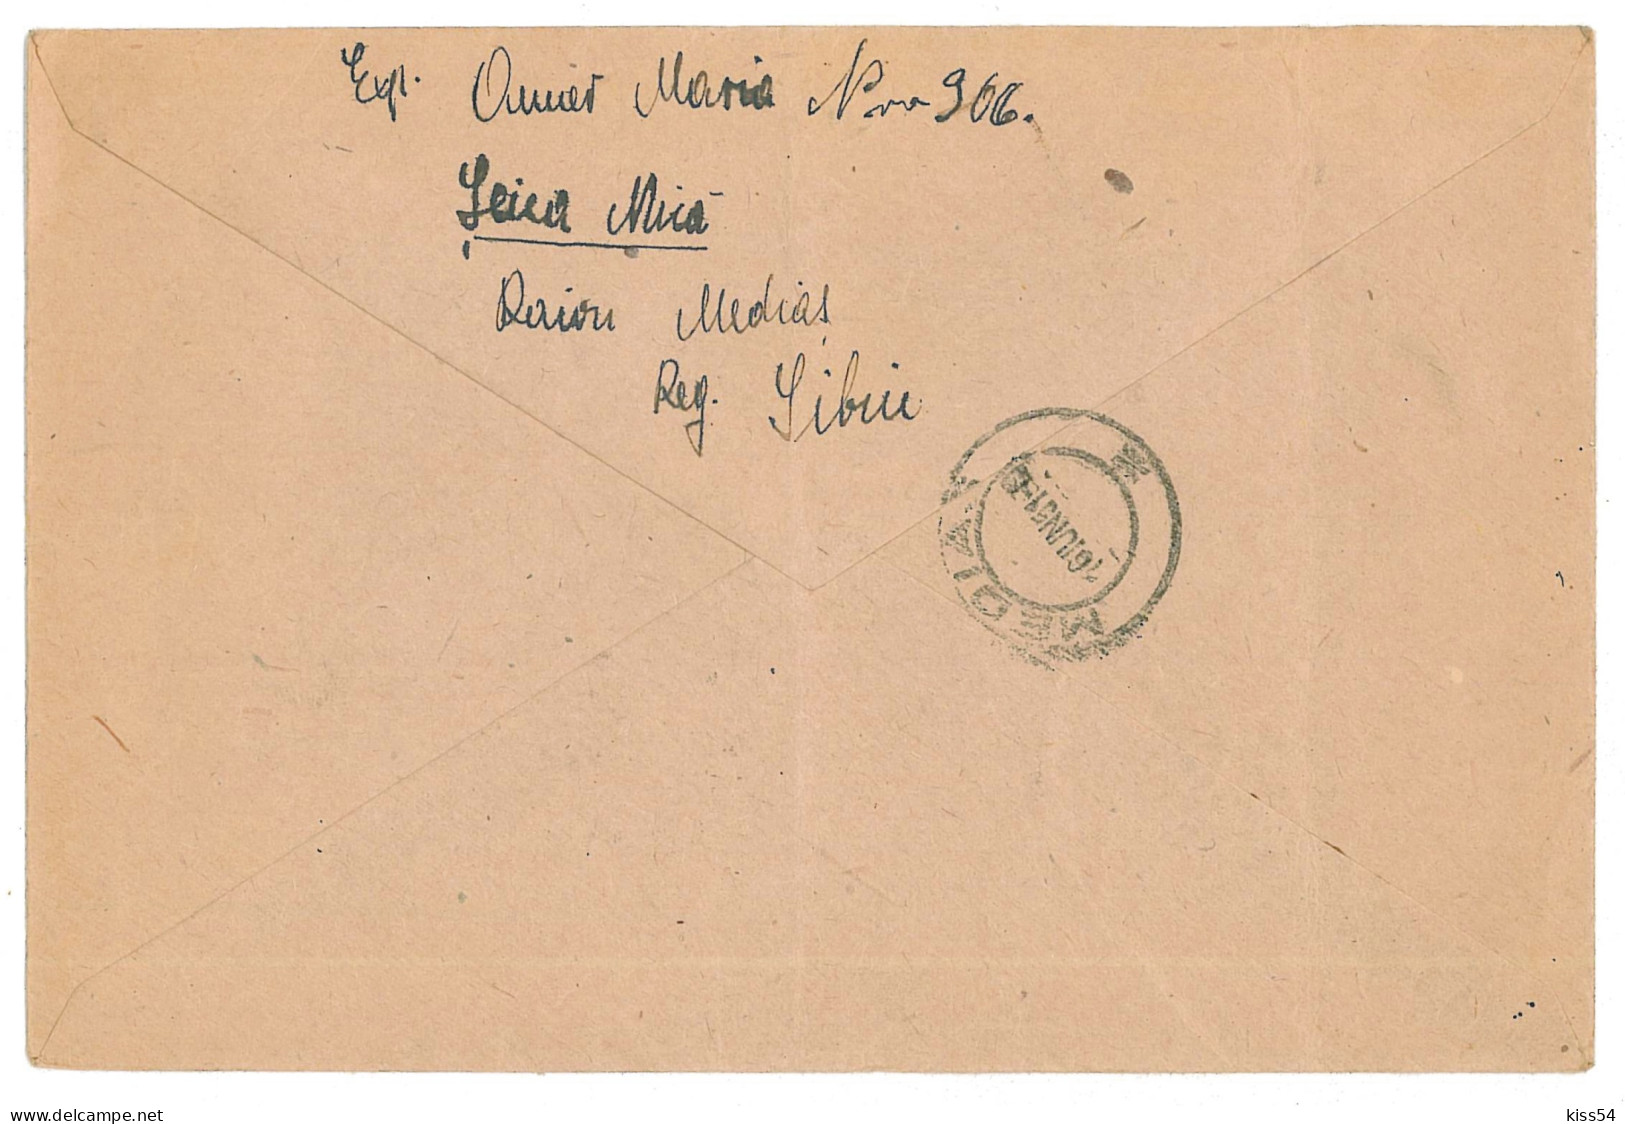 CIP 18 - 204-a SEICA-MICA, Sibiu - Cover - Used - 1951 - Briefe U. Dokumente